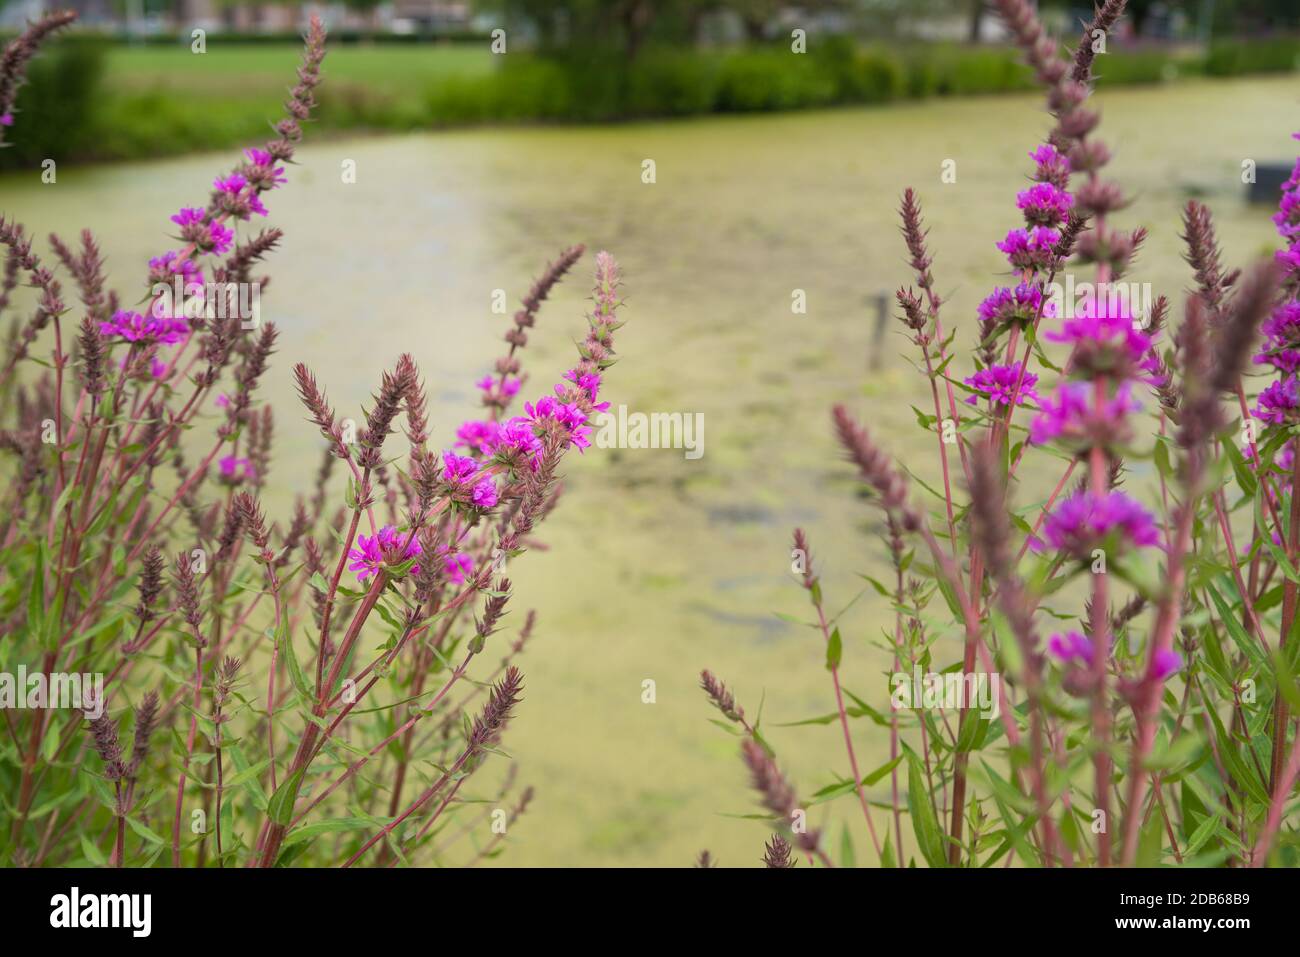 Rosa Blumen auf dem Feld. Lythrum salicaria (lila lockerestrife, stachelige lockere Estrife, lilafarbenes Lythrum). Wildblumen Stockfoto